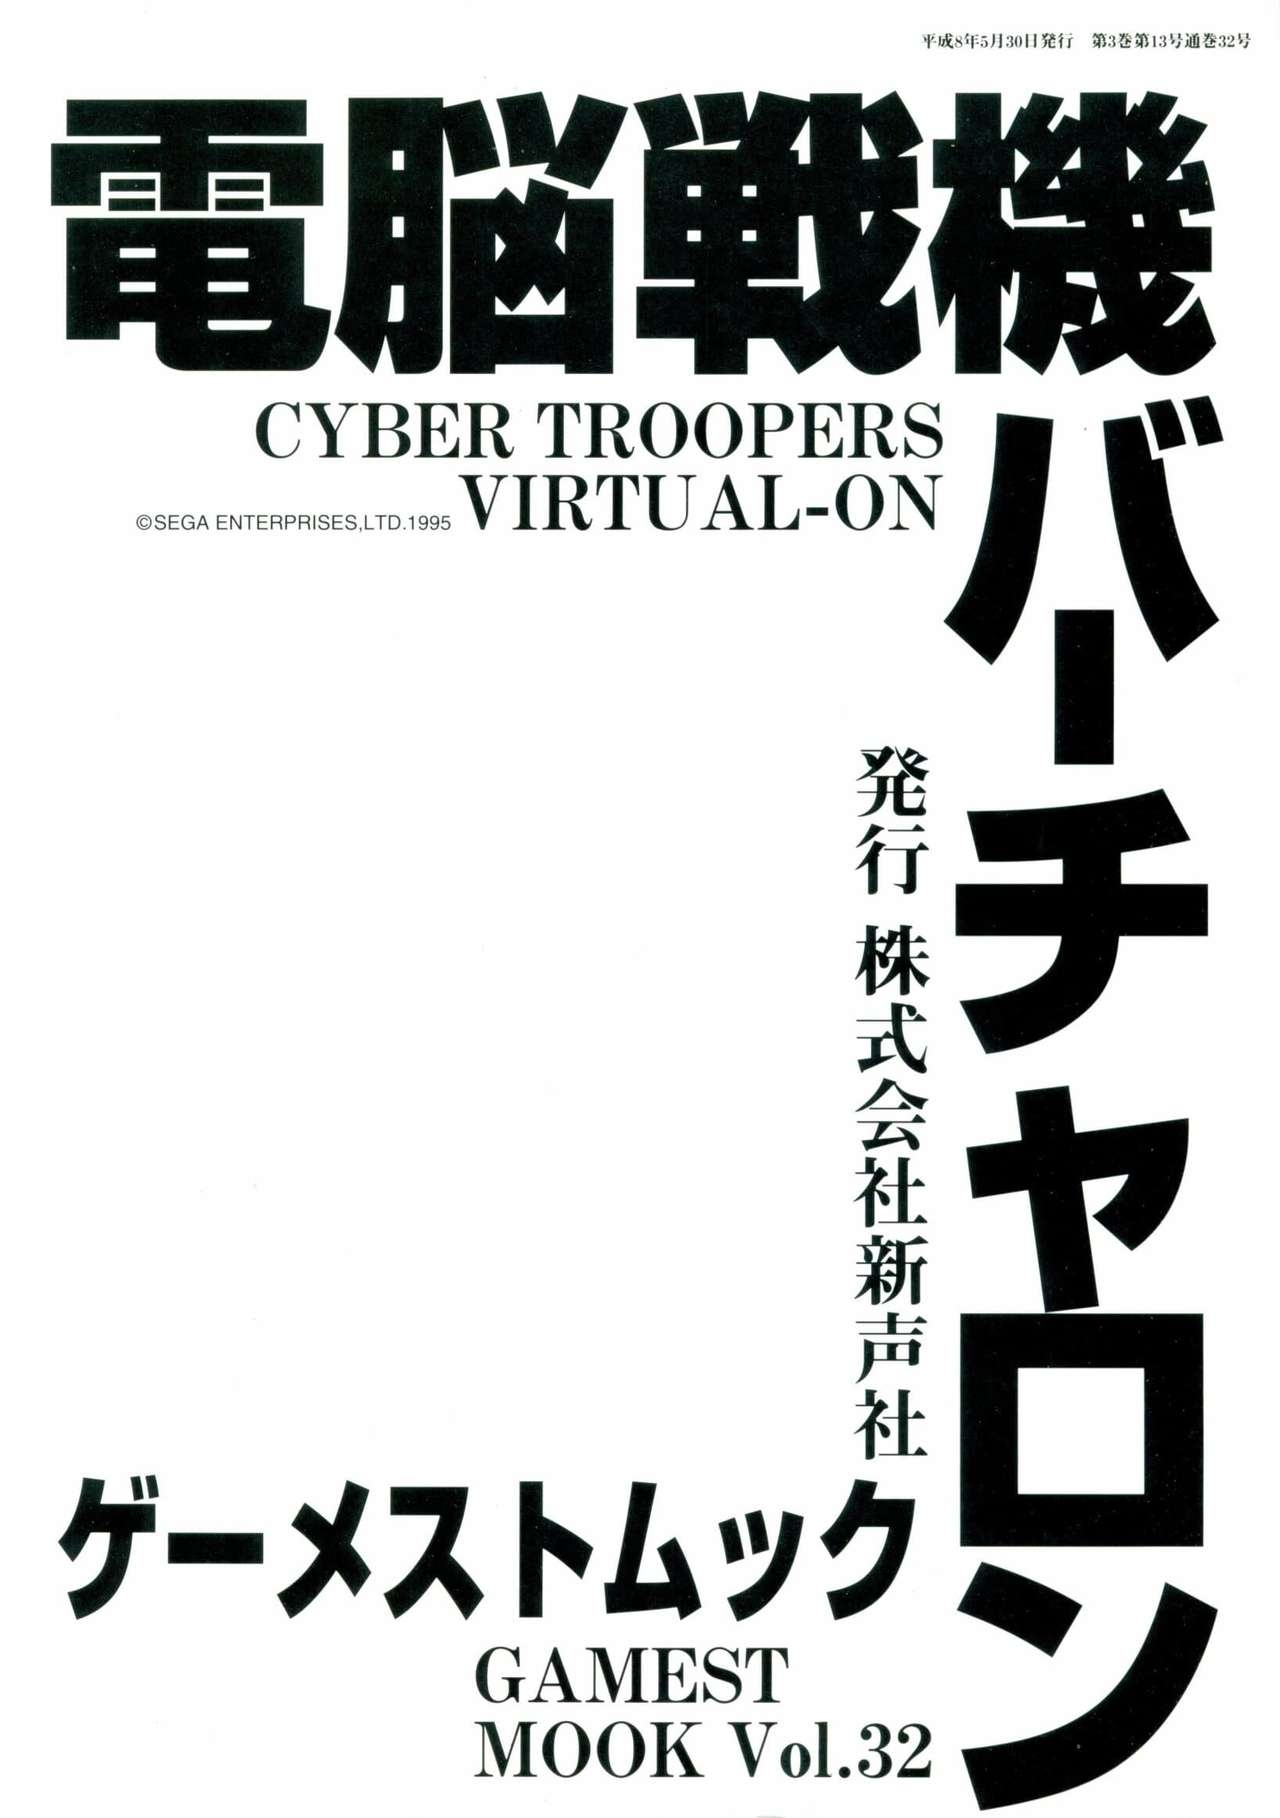 Cyber Troopers Virtual-On - Gamest Mook Vol. 32 1